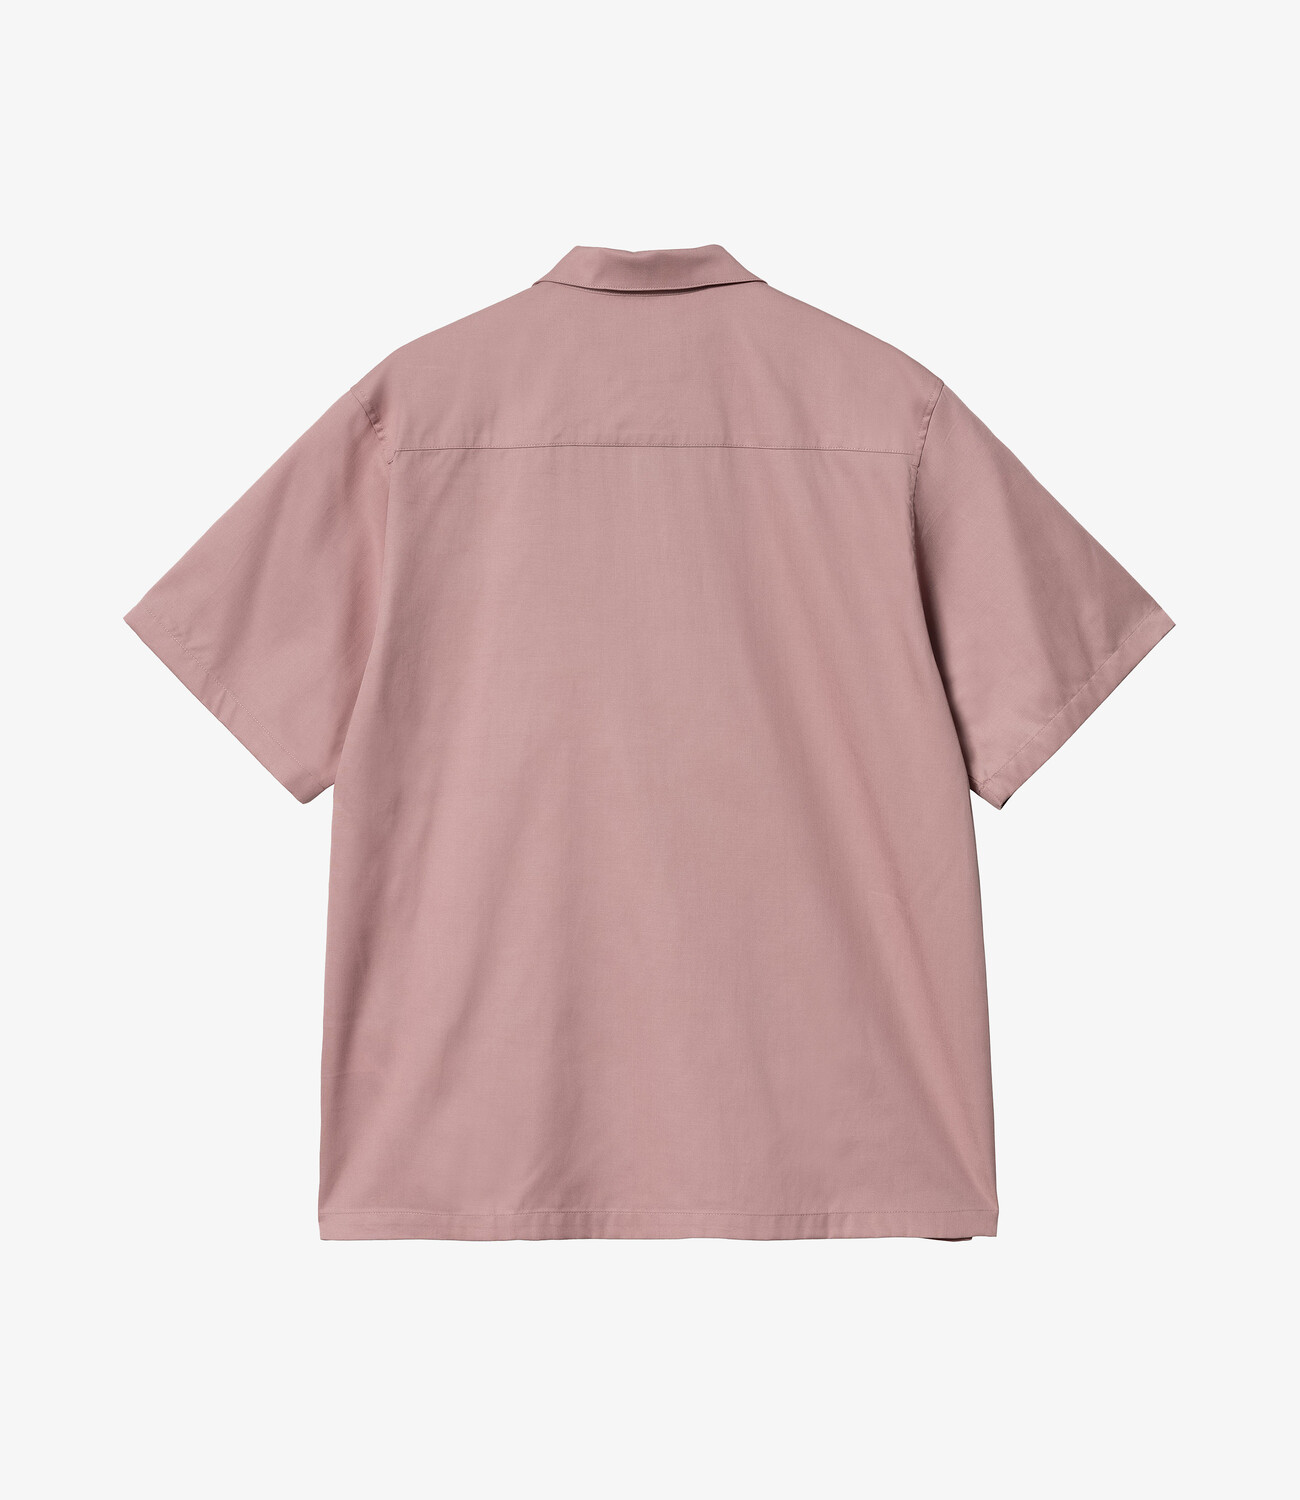 Delray shirt - Glassy pink / black